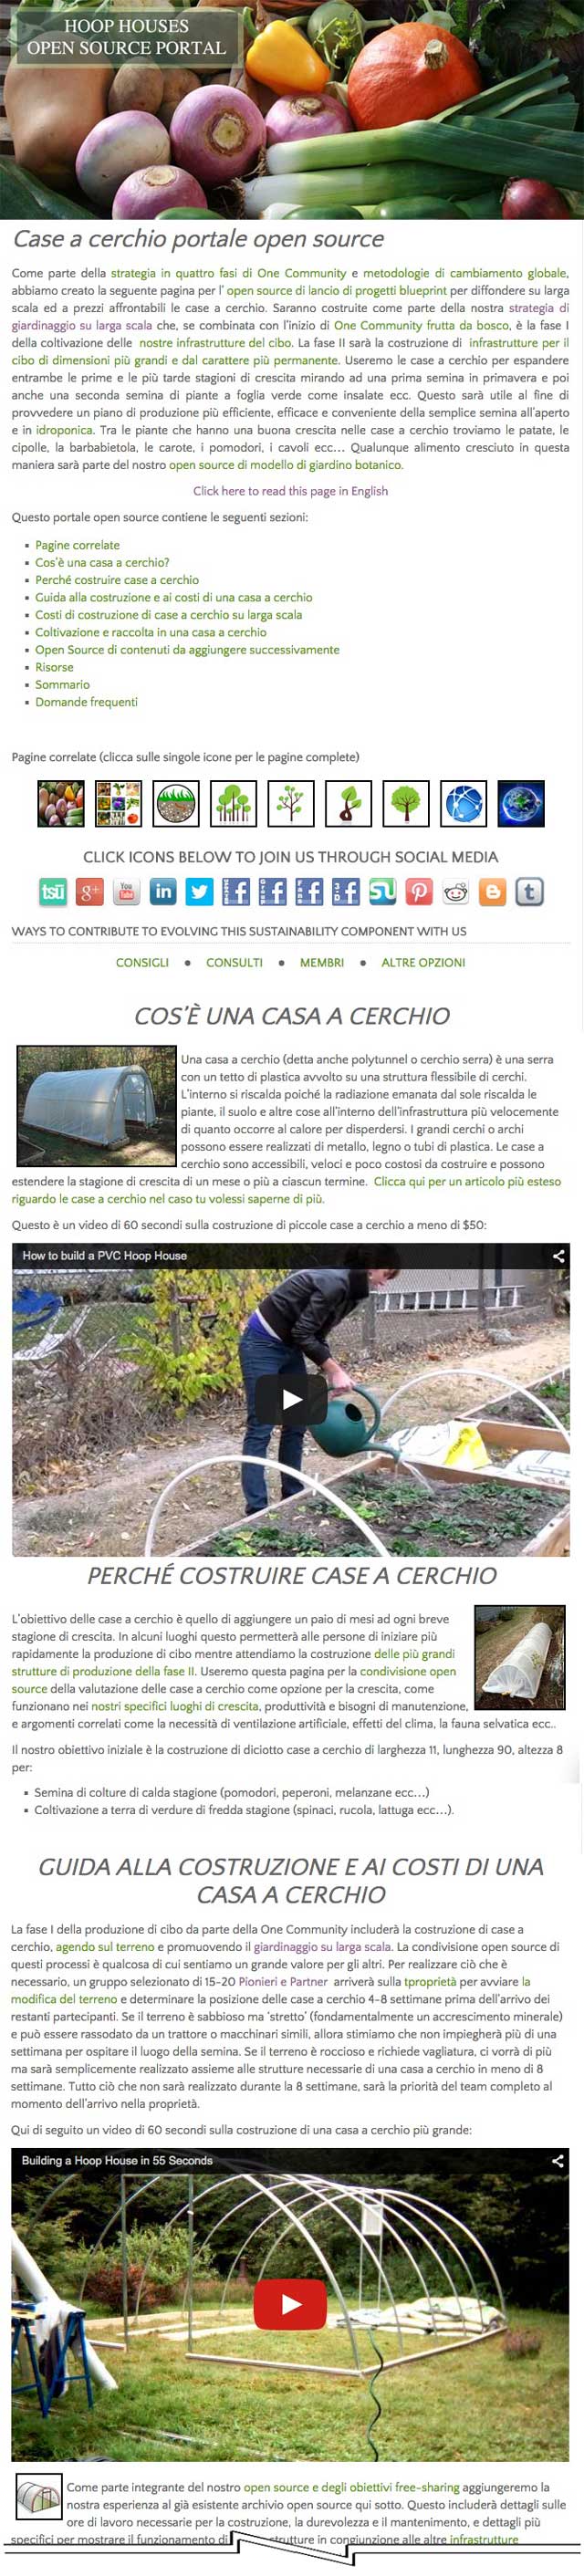 Hoop house page translated to Italian, One Community